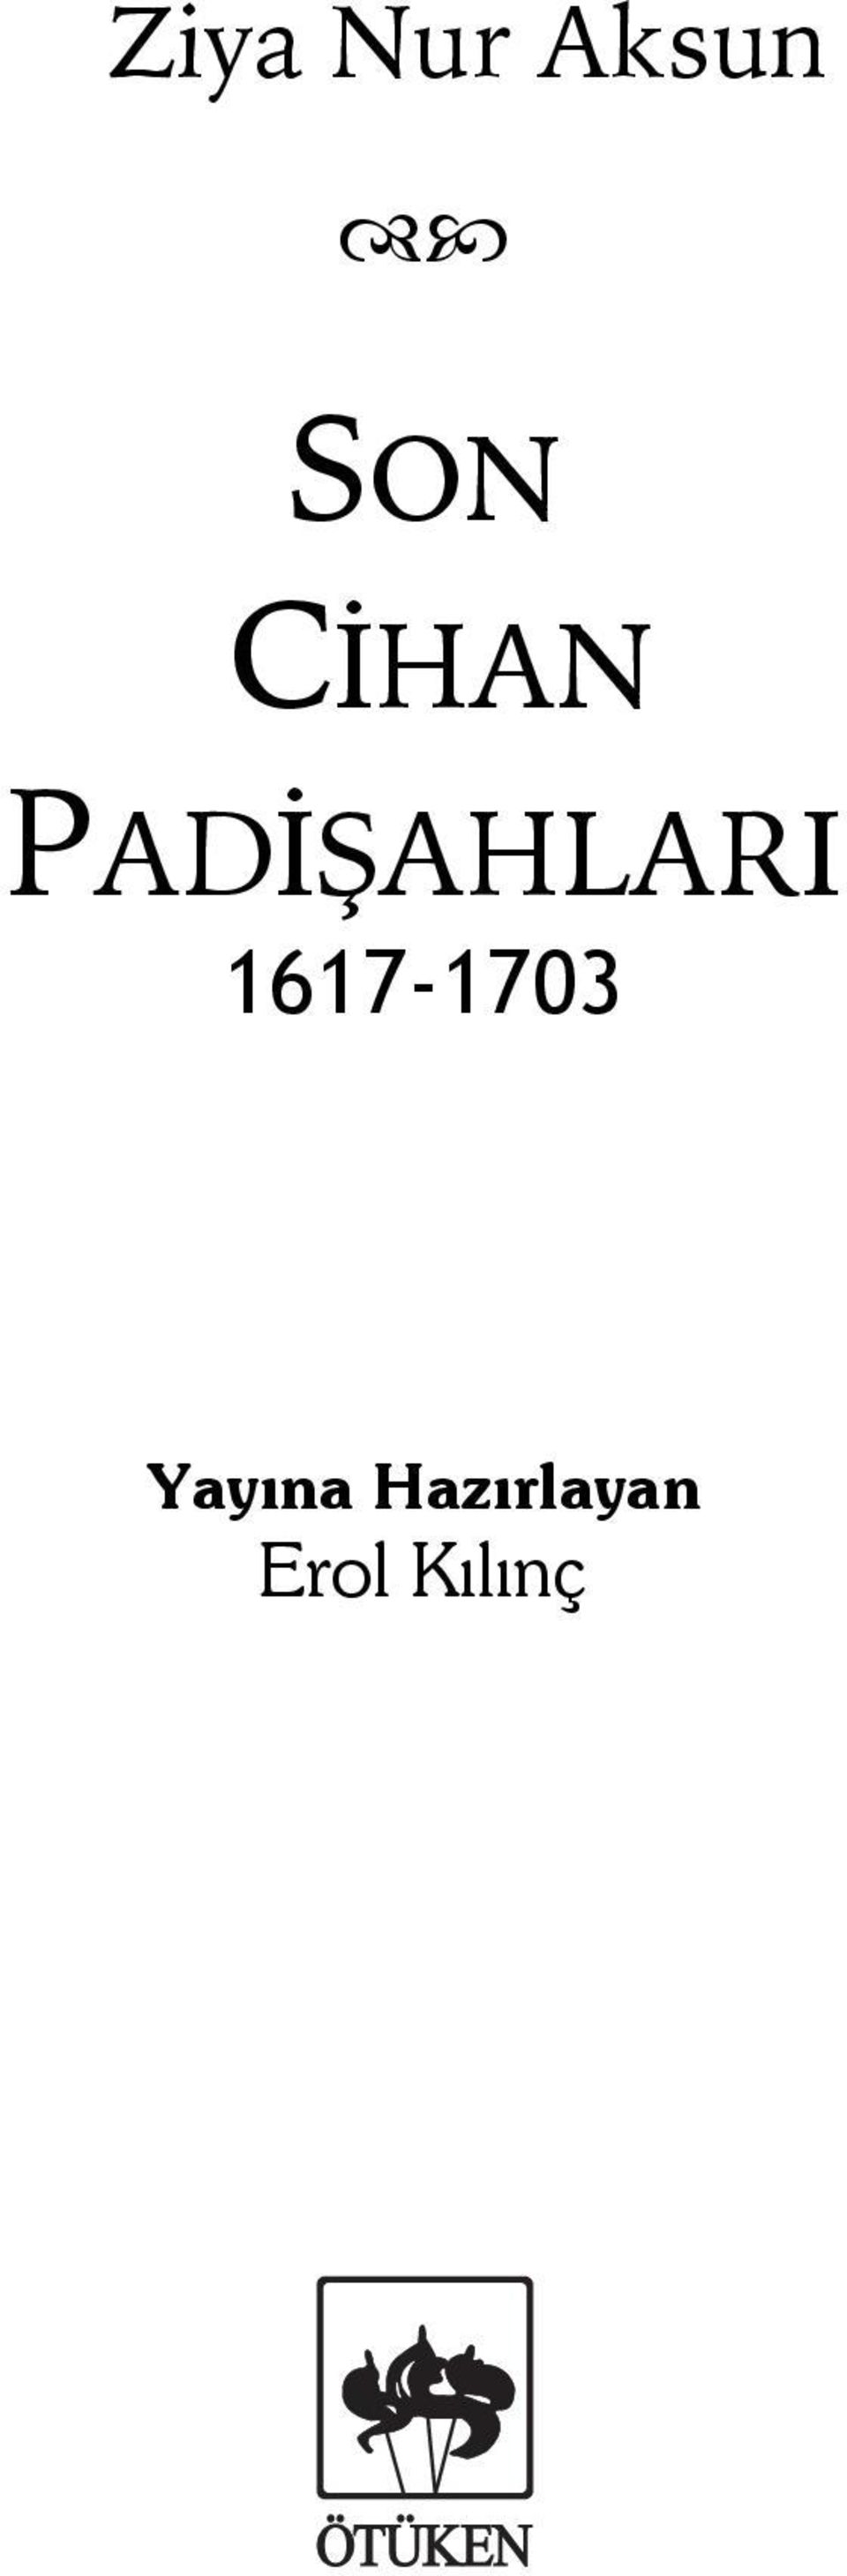 1617-1703 Yayına